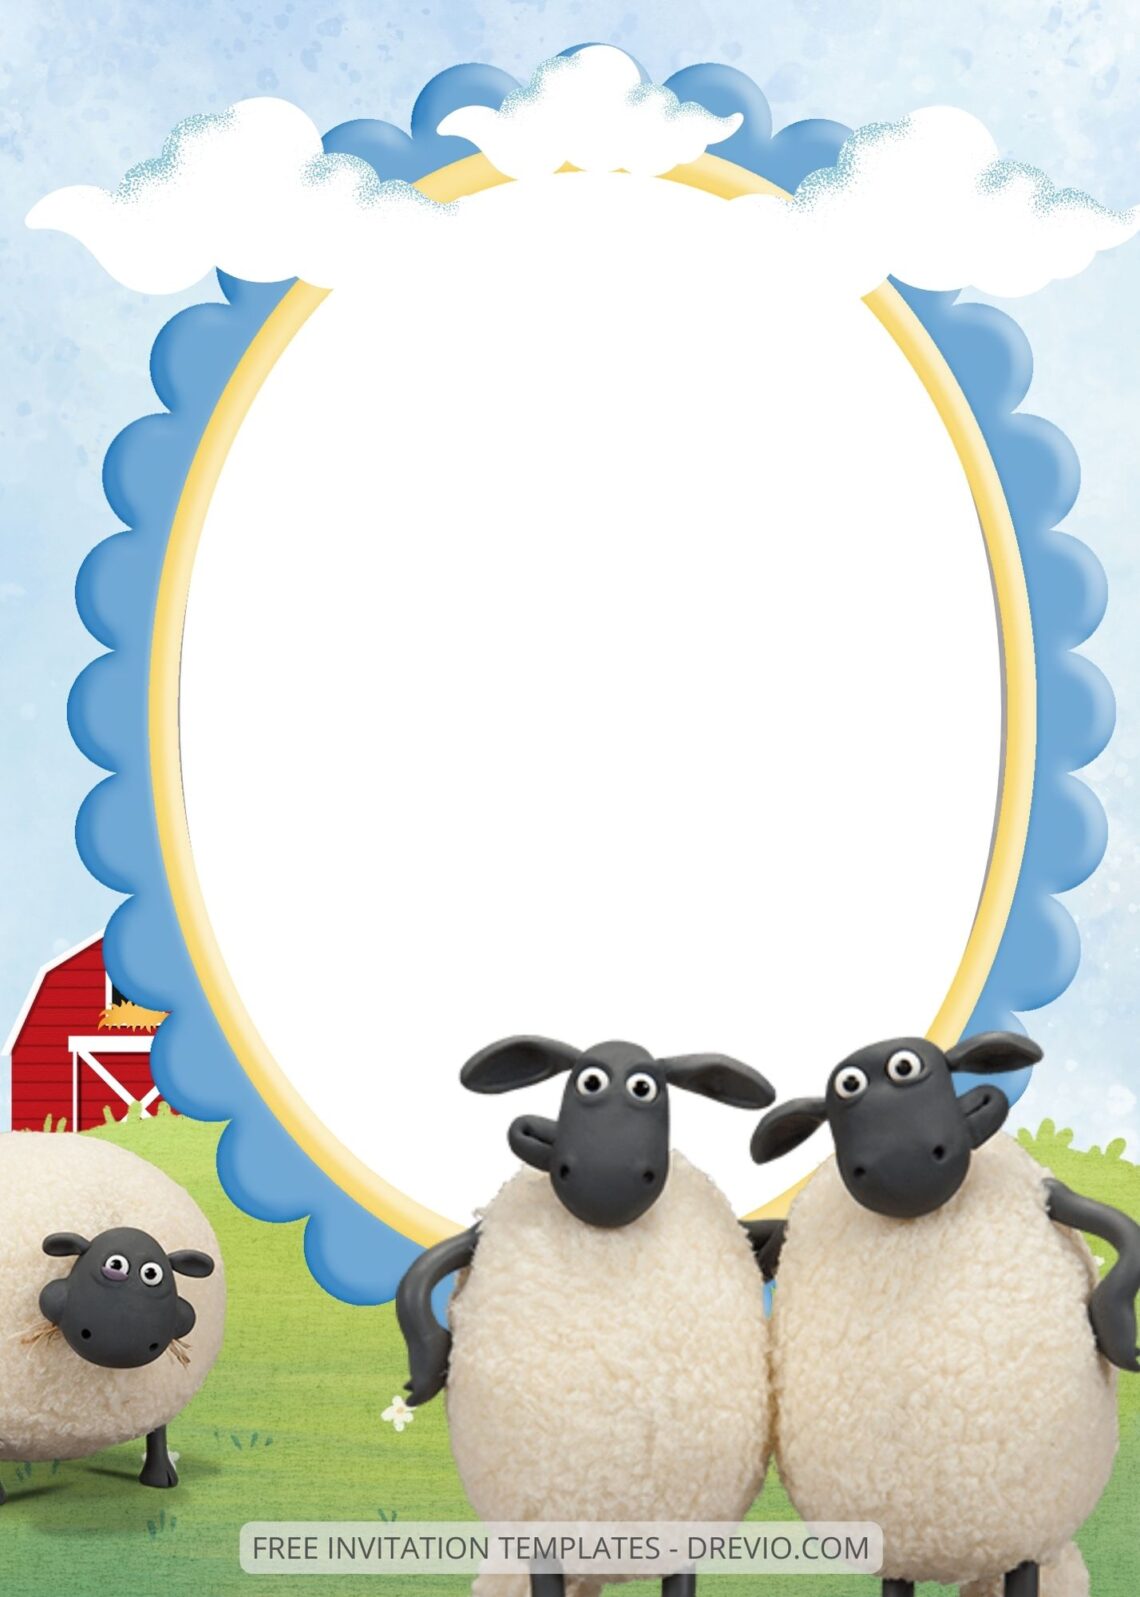 FREE EDITABLE - 9+ Shaun The Sheep Canva Birthday Invitation Templates Six